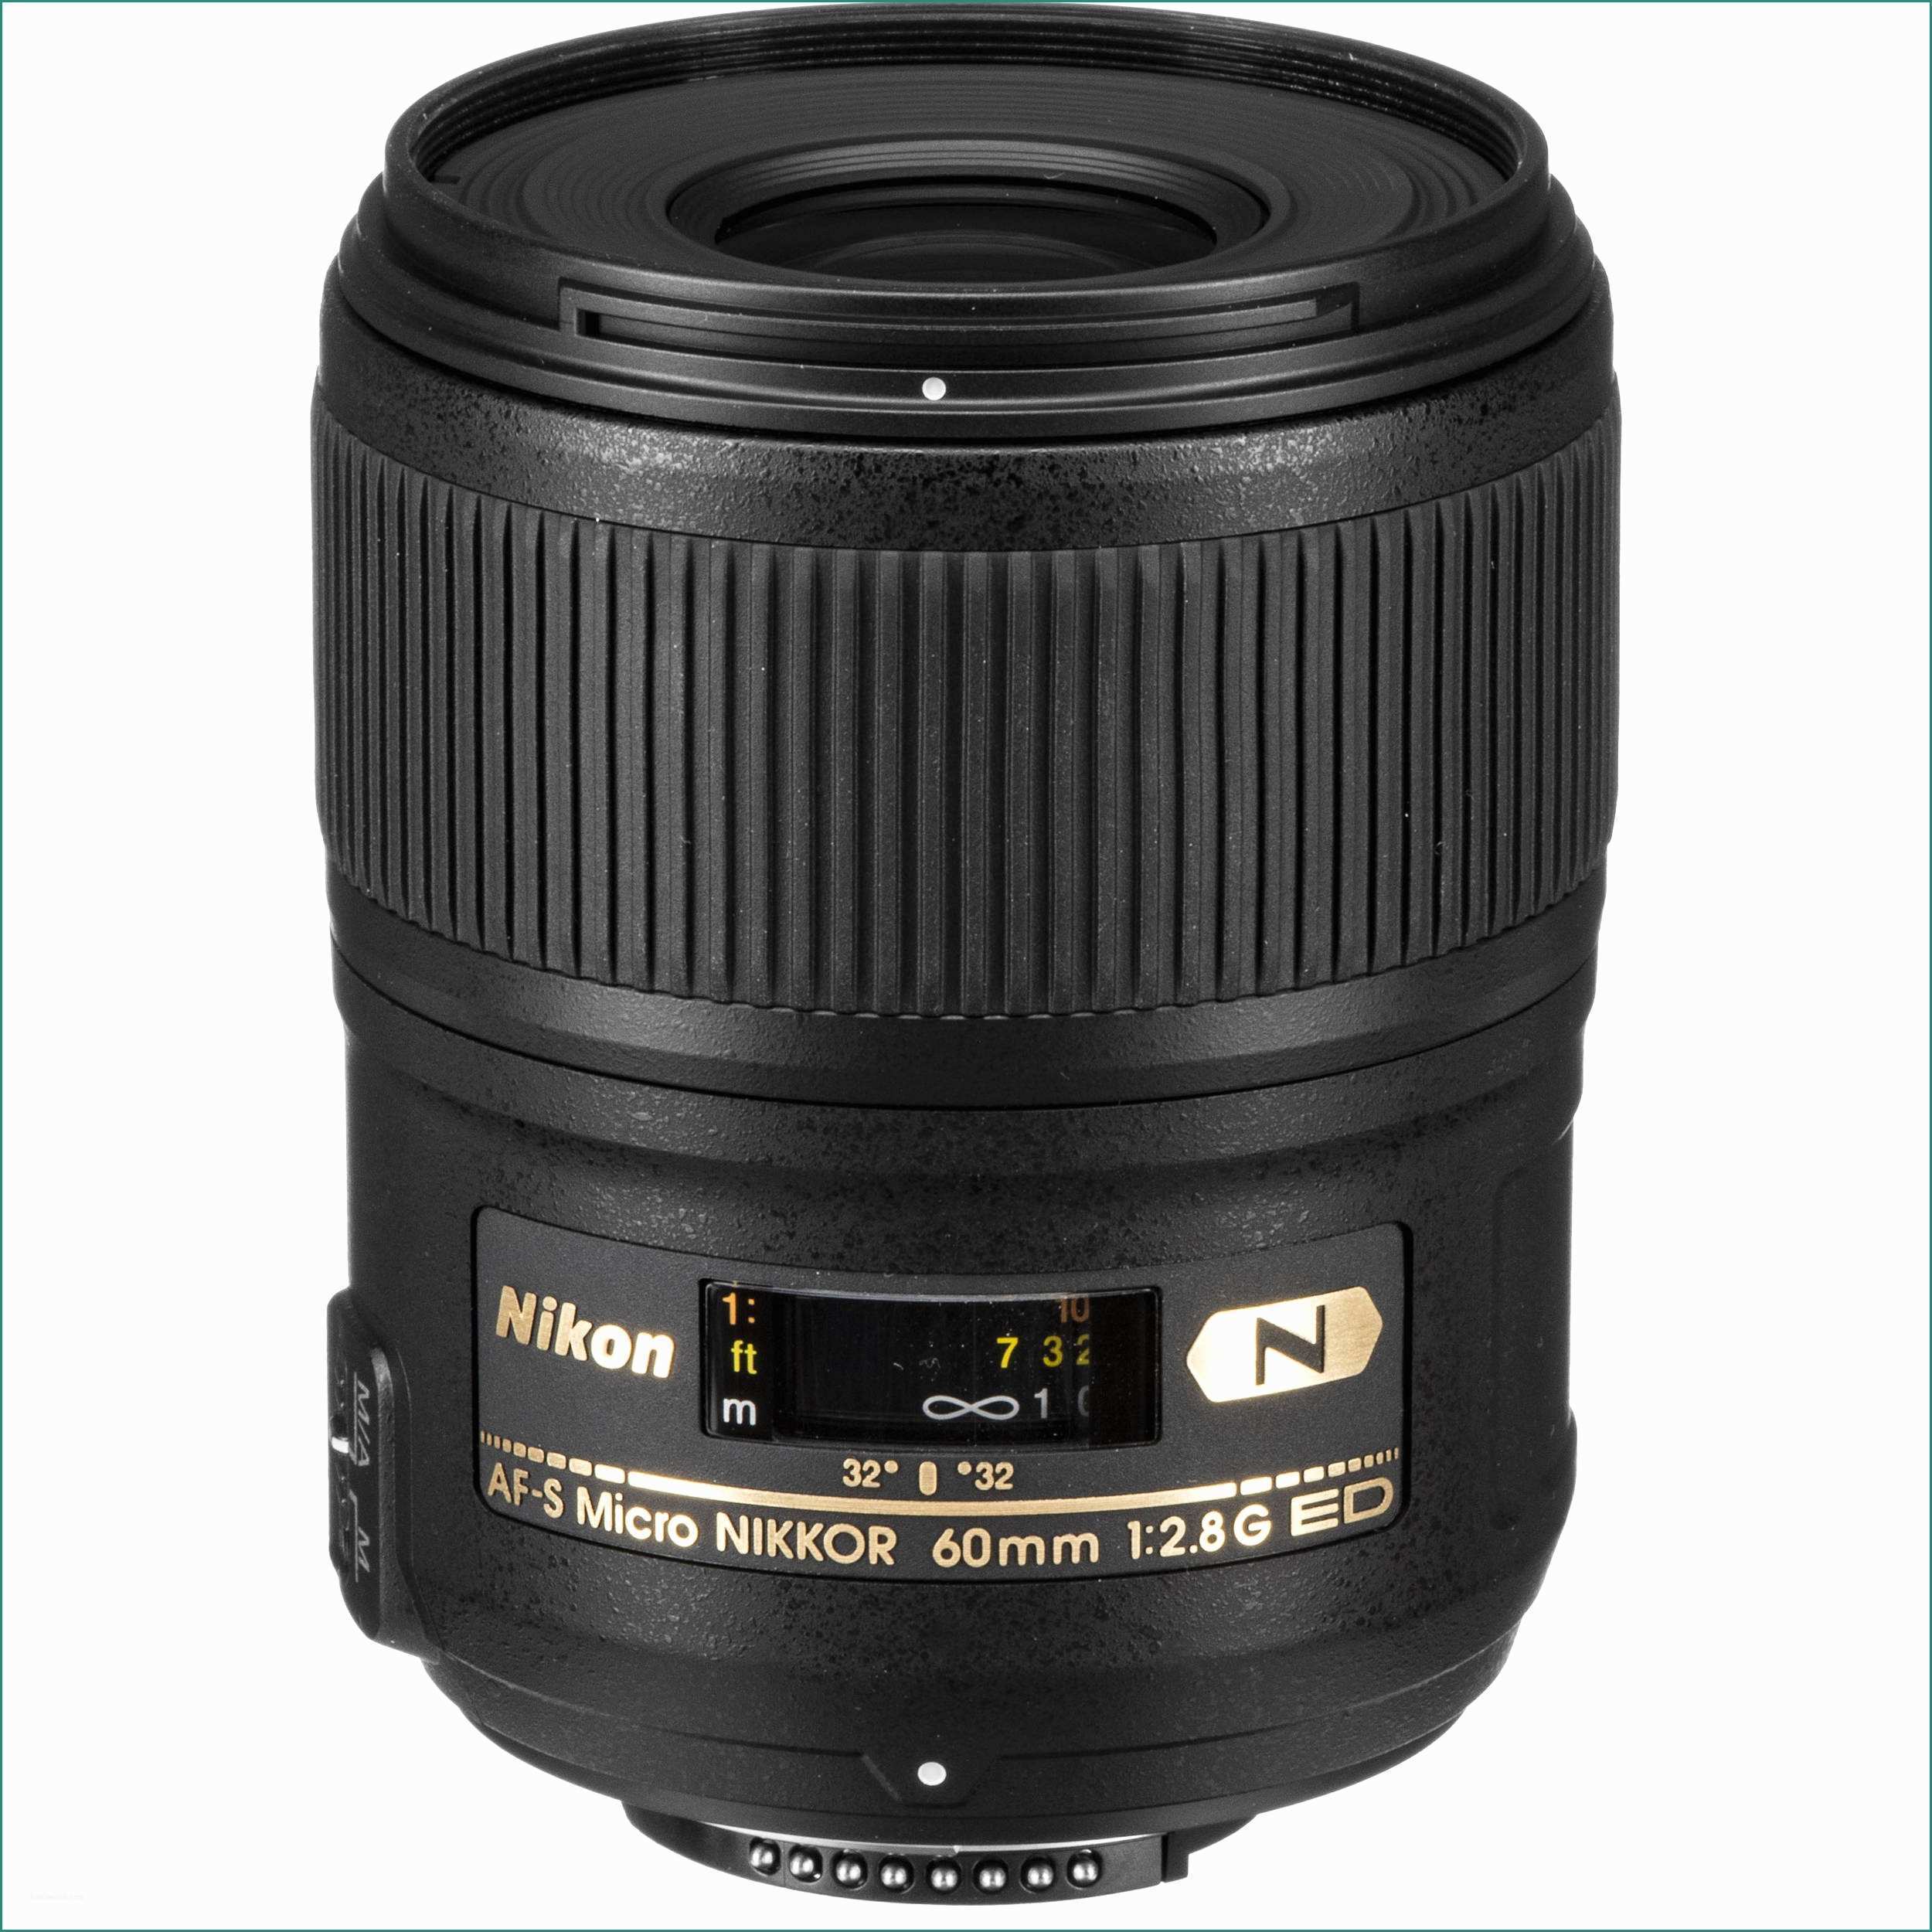 Super Sweeper Plus Recensioni E Nikon Af S Micro Nikkor 60mm F 2 8g Ed Lens 2177 B&h Video